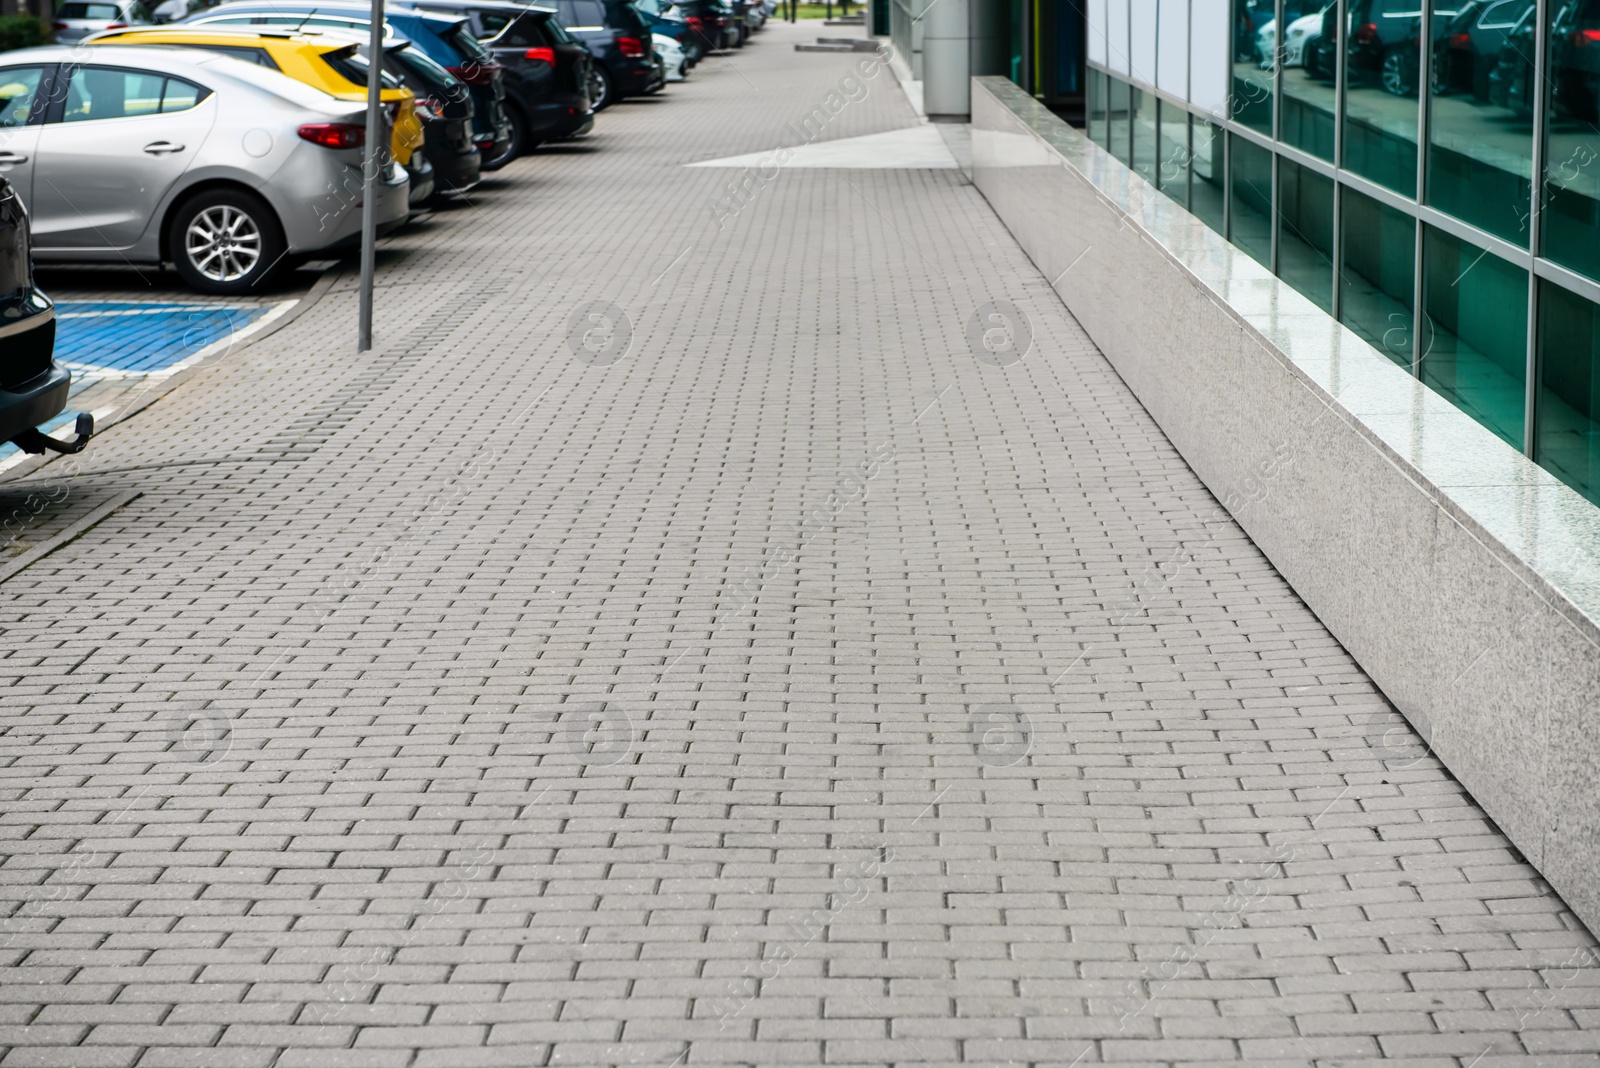 Photo of Sidewalk path near cars on city street. Footpath covering